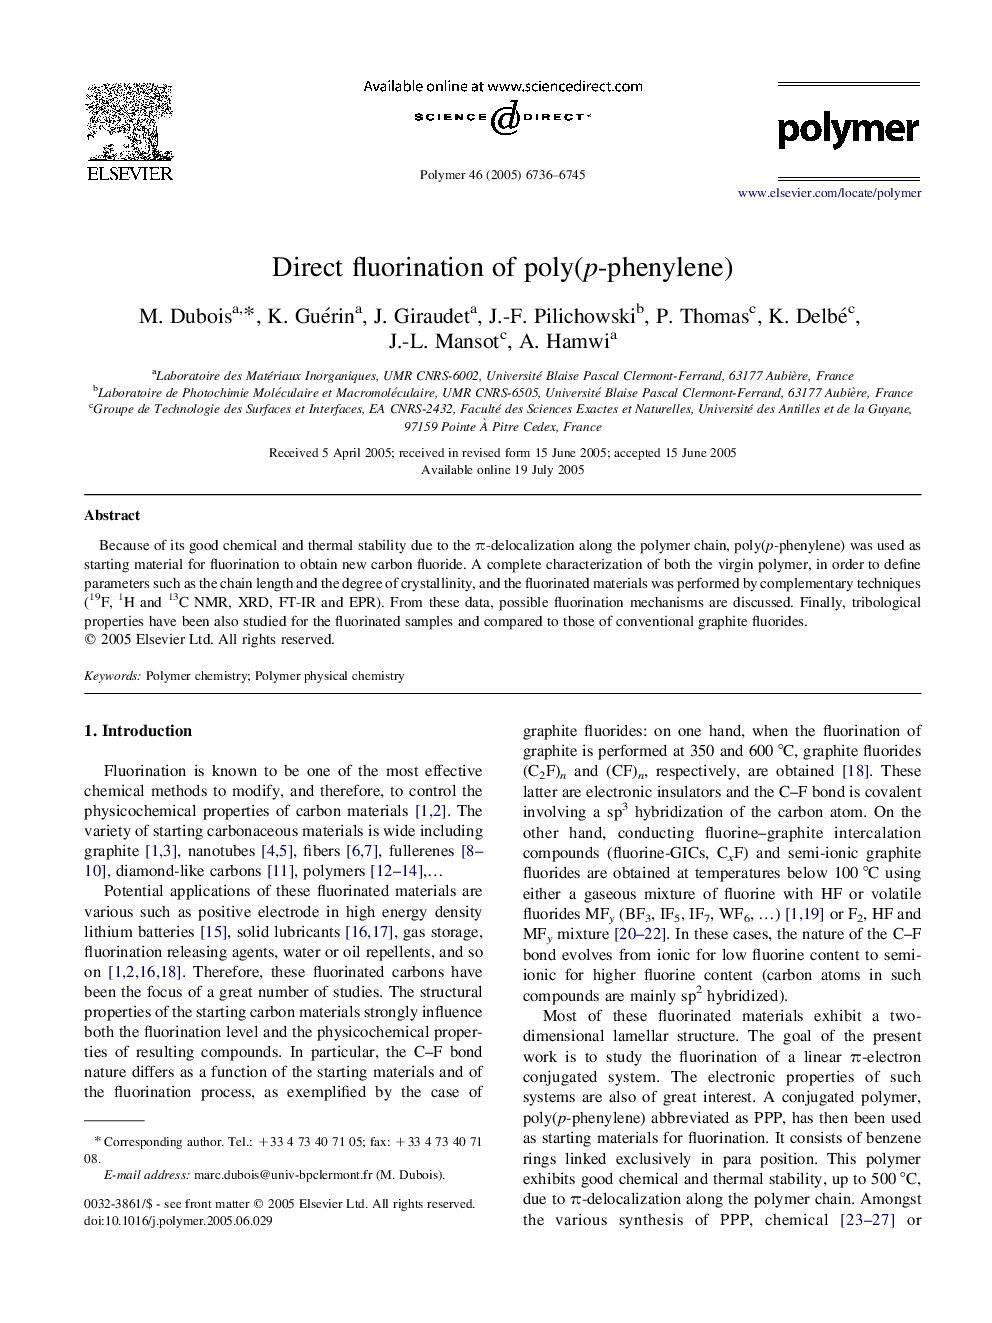 Direct fluorination of poly(p-phenylene)